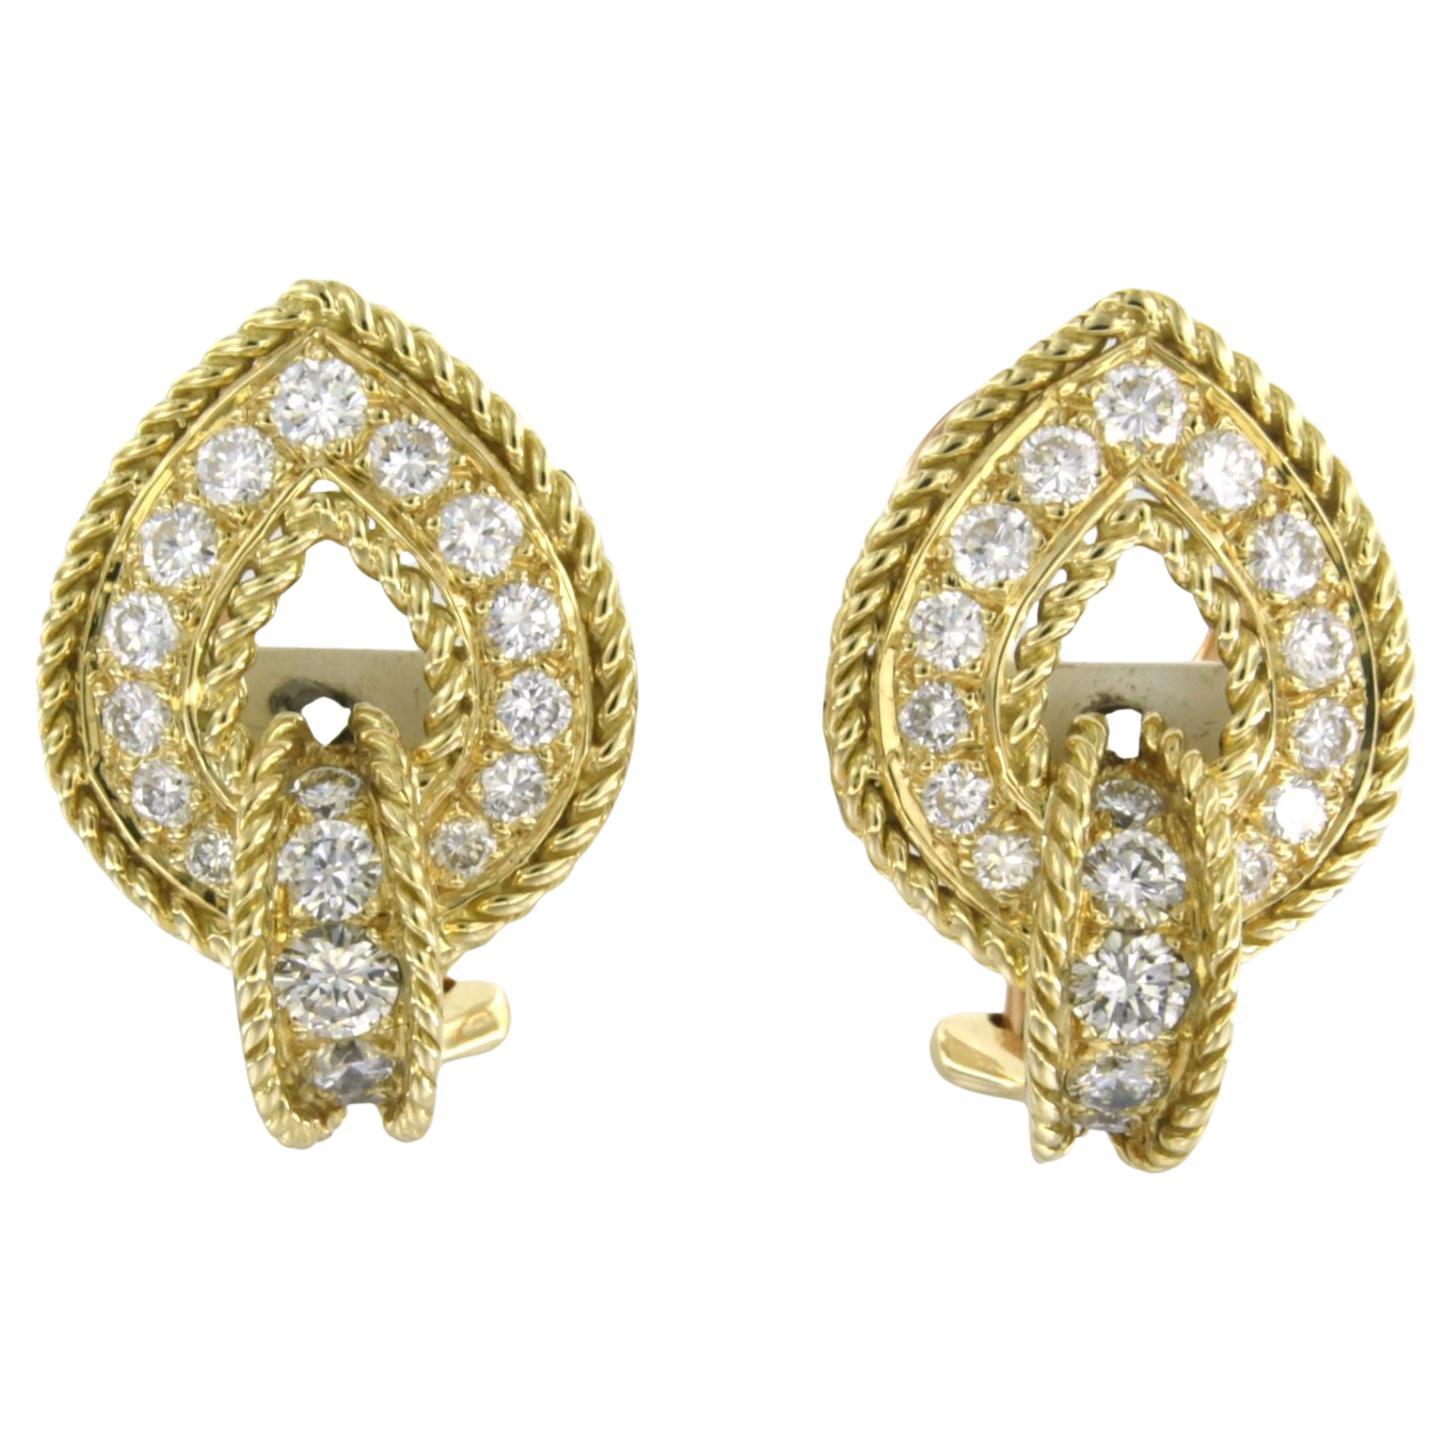 Boucles d'oreilles à clip serties de diamants jusqu'à 2,00 carats, or jaune 18 carats